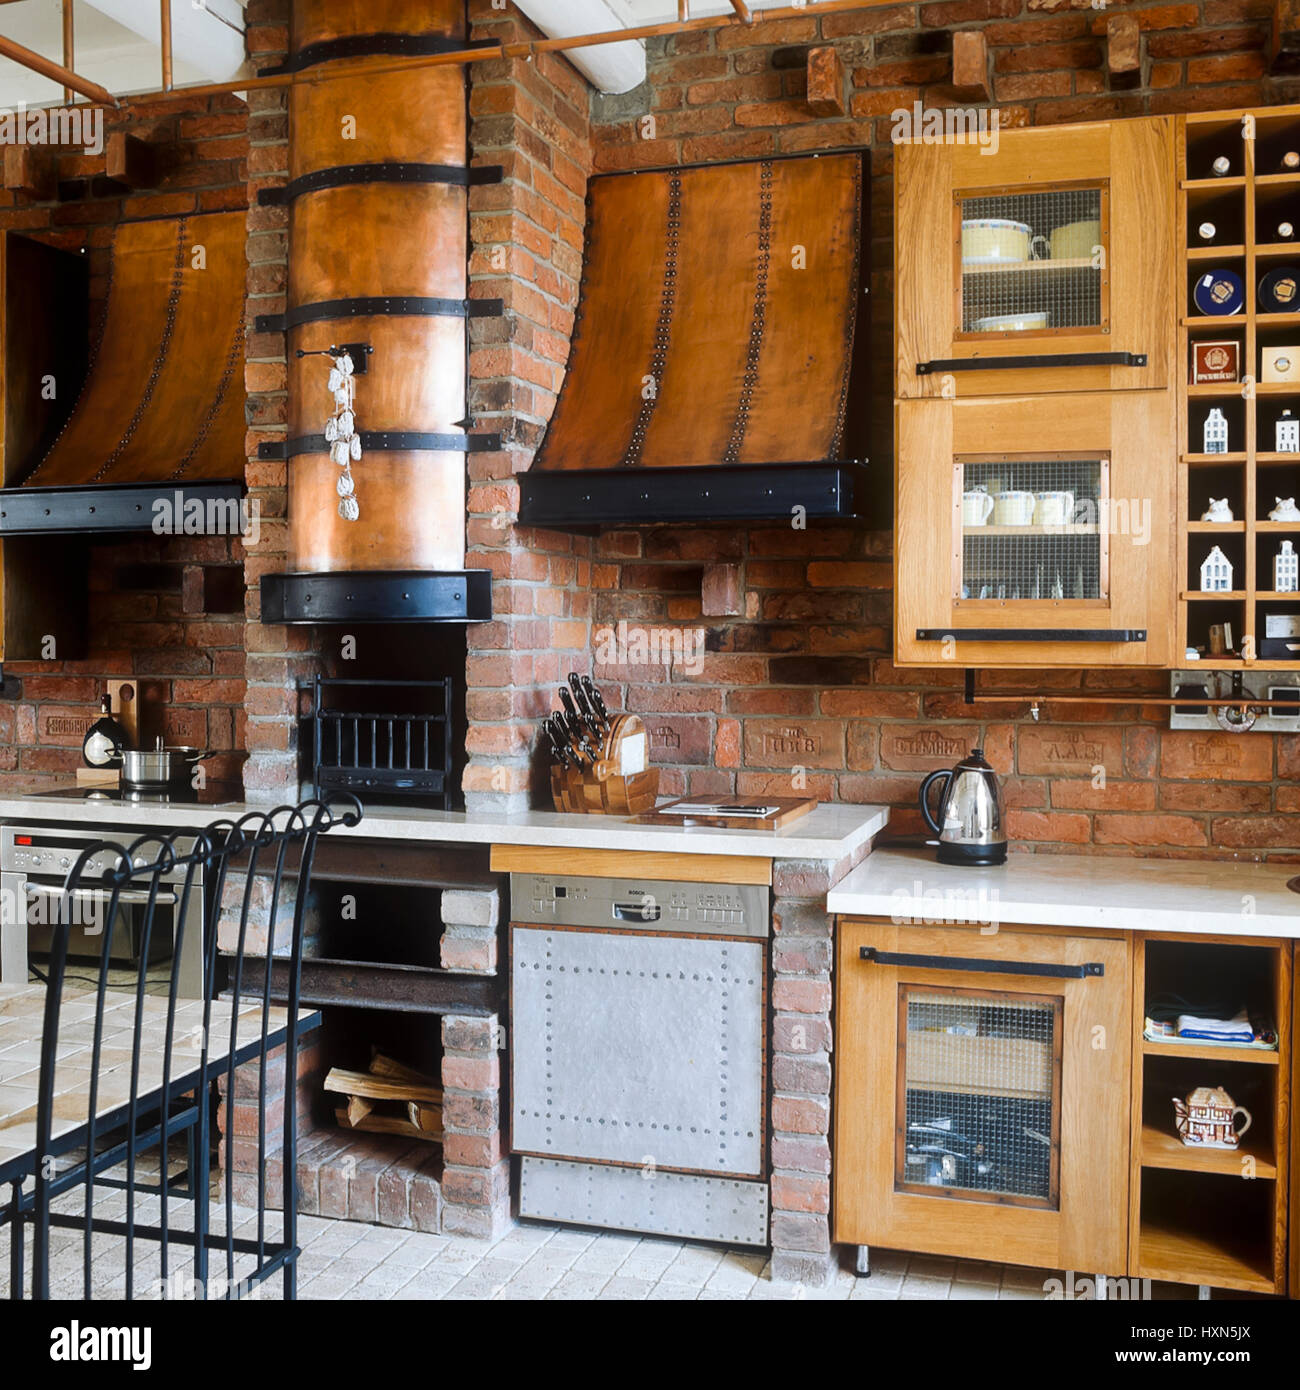 Rustic style kitchen. Stock Photo